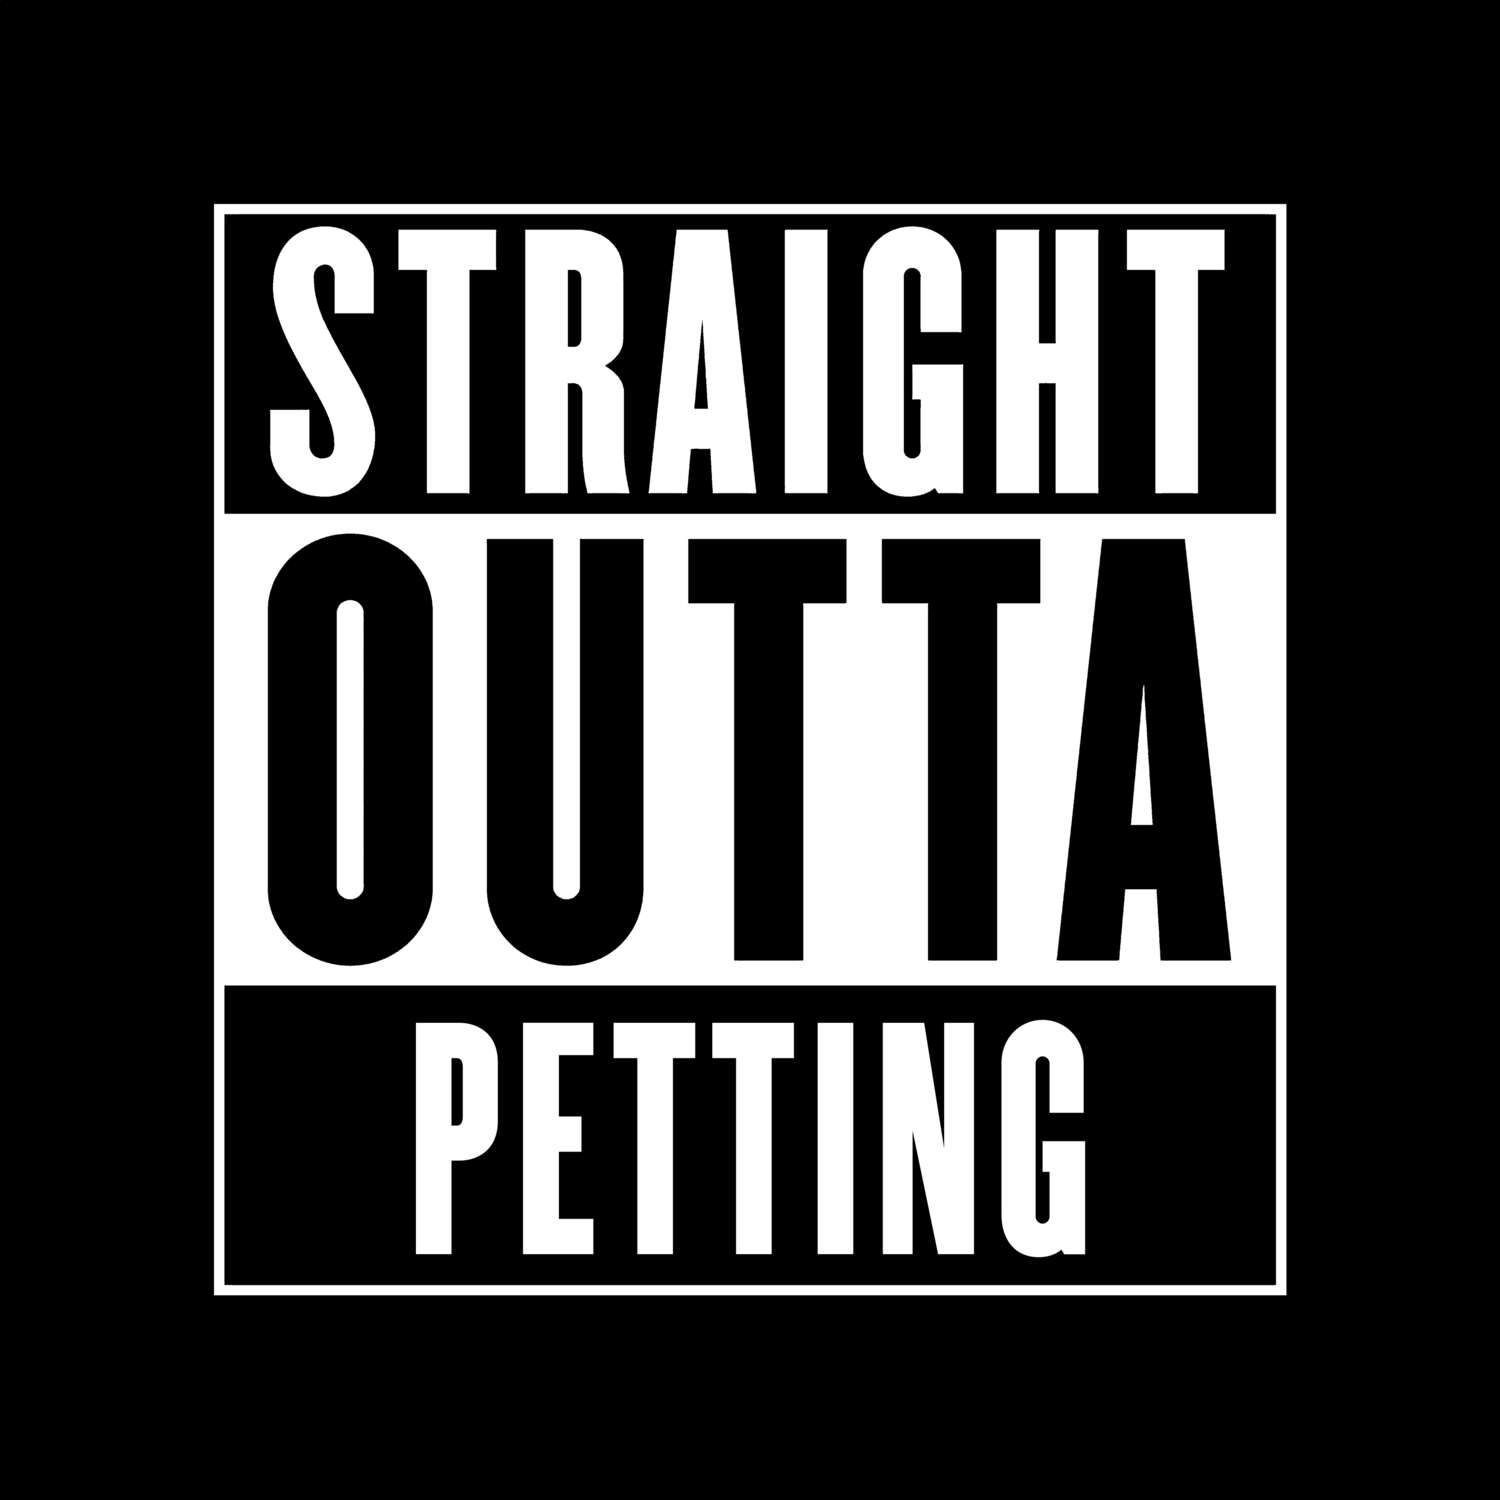 Petting T-Shirt »Straight Outta«